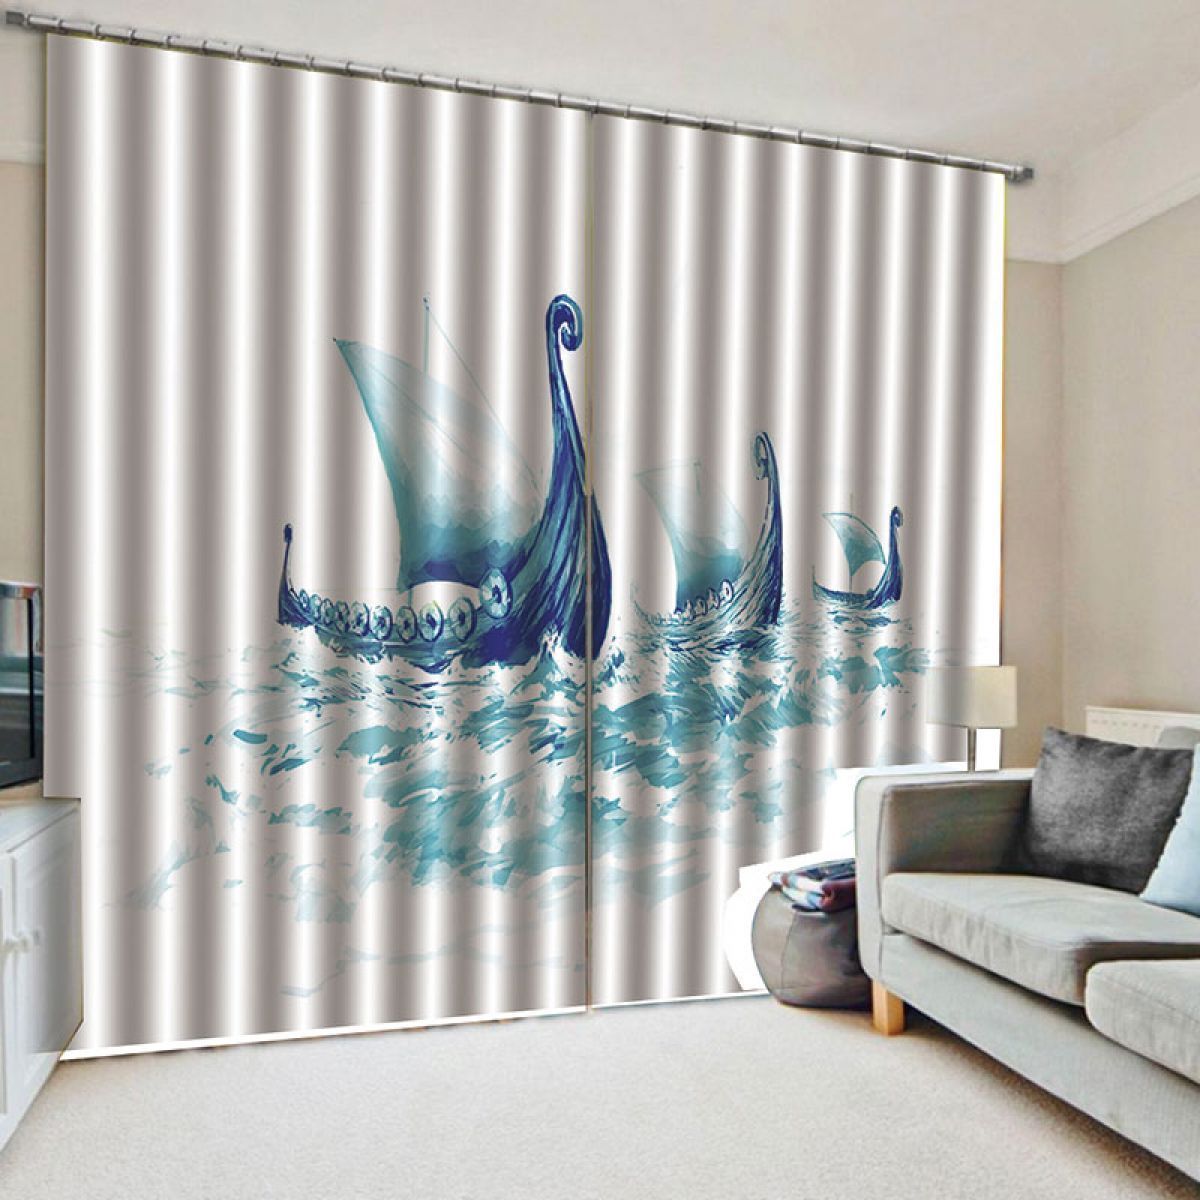 3d Sailboat Printed Window Curtain Home Decor